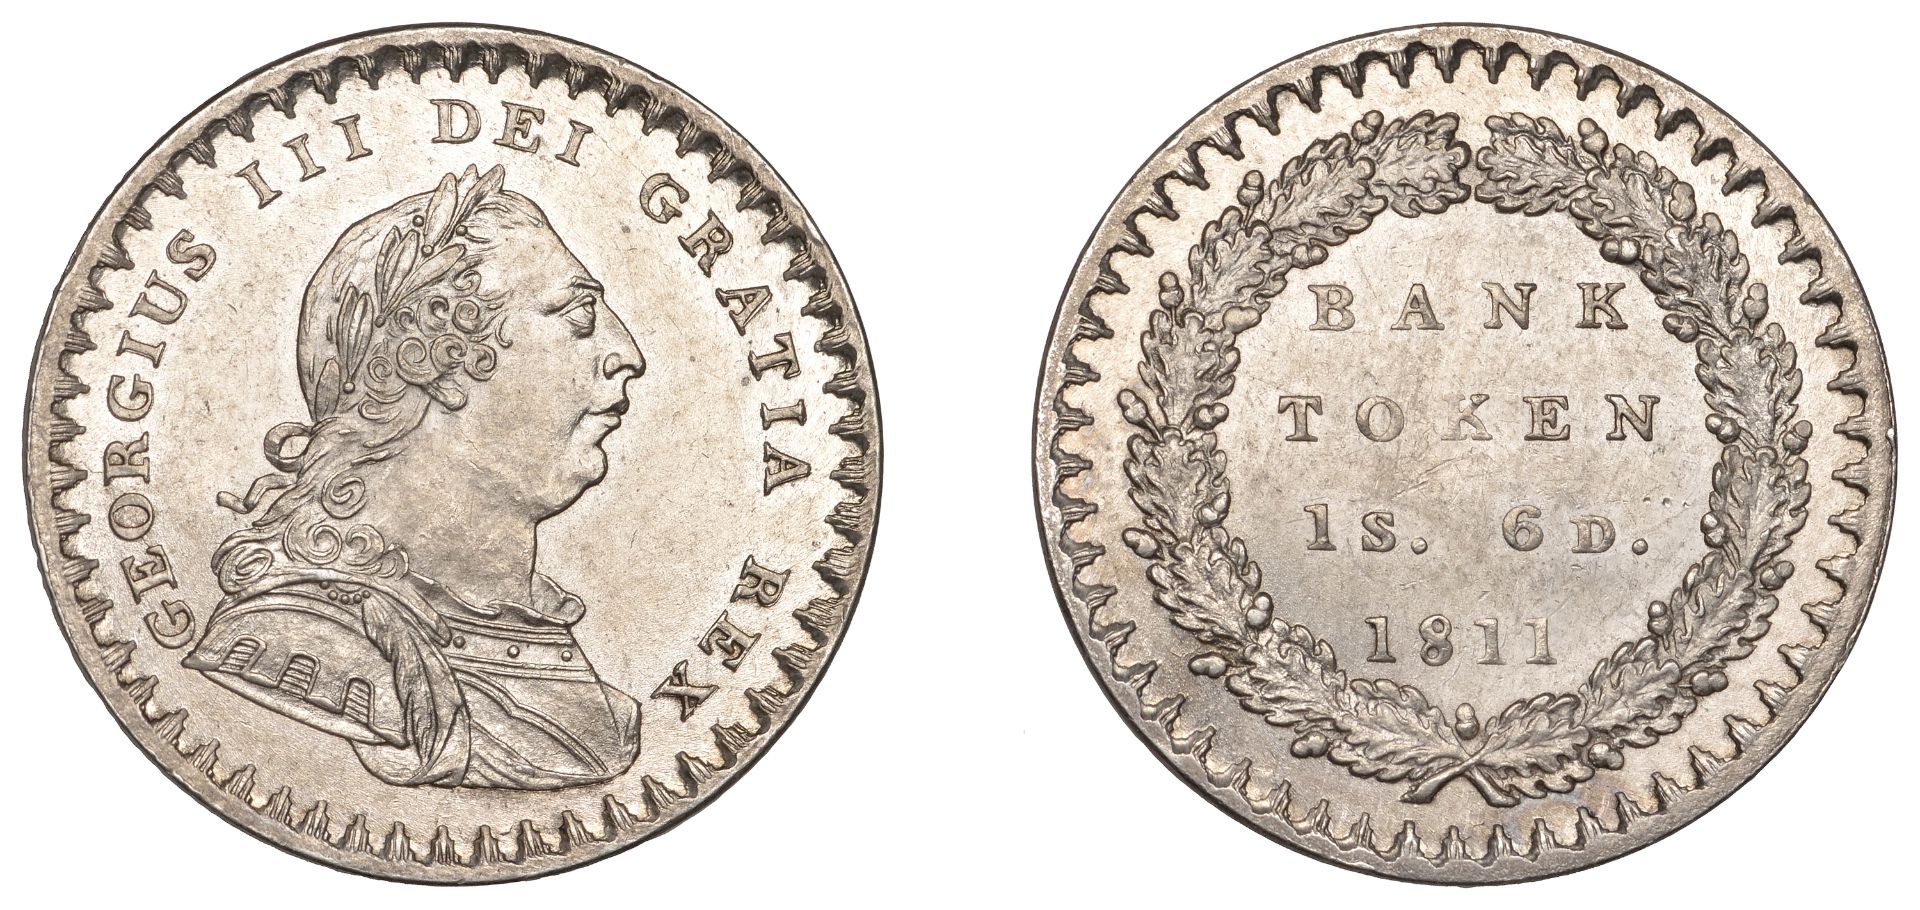 George III (1760-1820), Bank of England, Eighteen Pence, 1811 (ESC 2112; S 3771). Good extre...